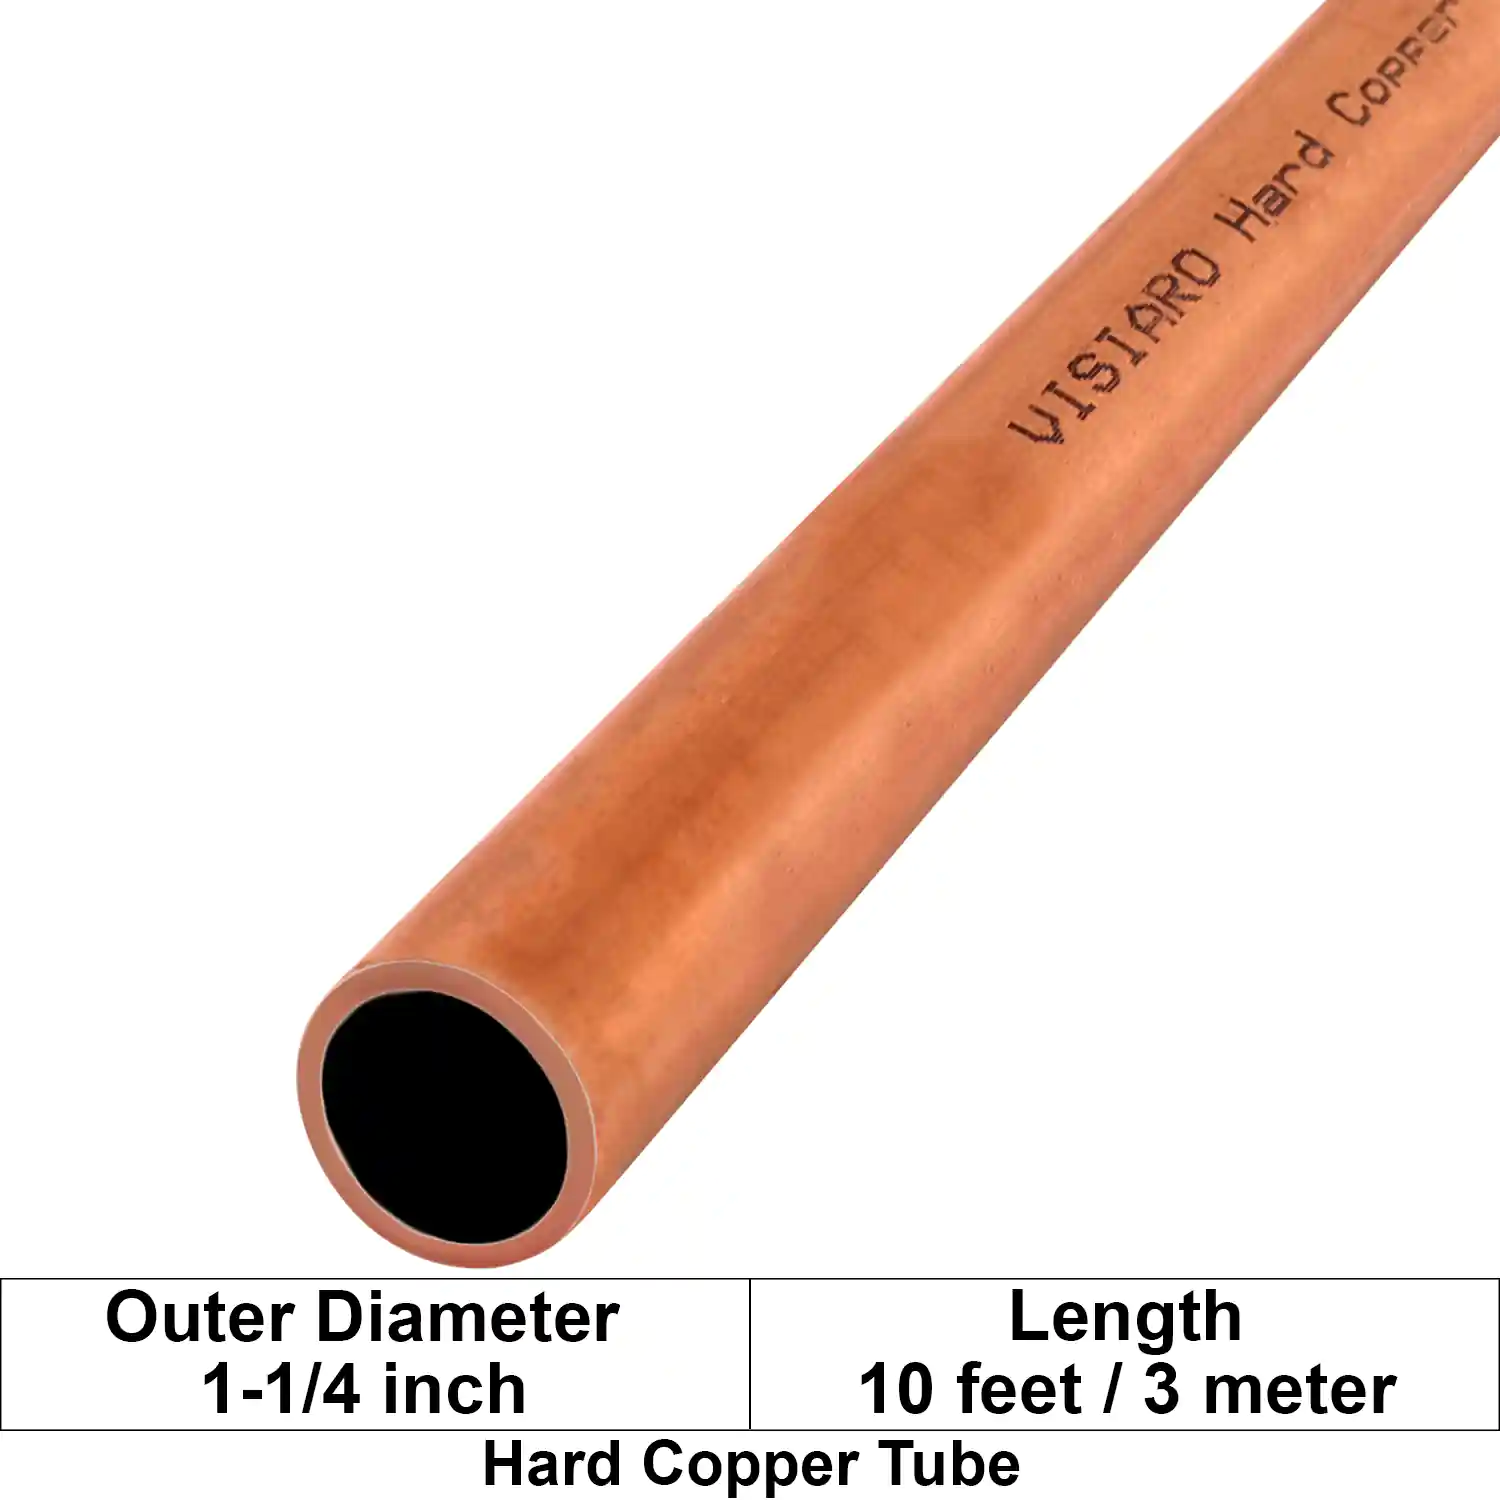 Visiaro Hard Copper Tube 10ft long Outer Diameter - 1-1/4 inch